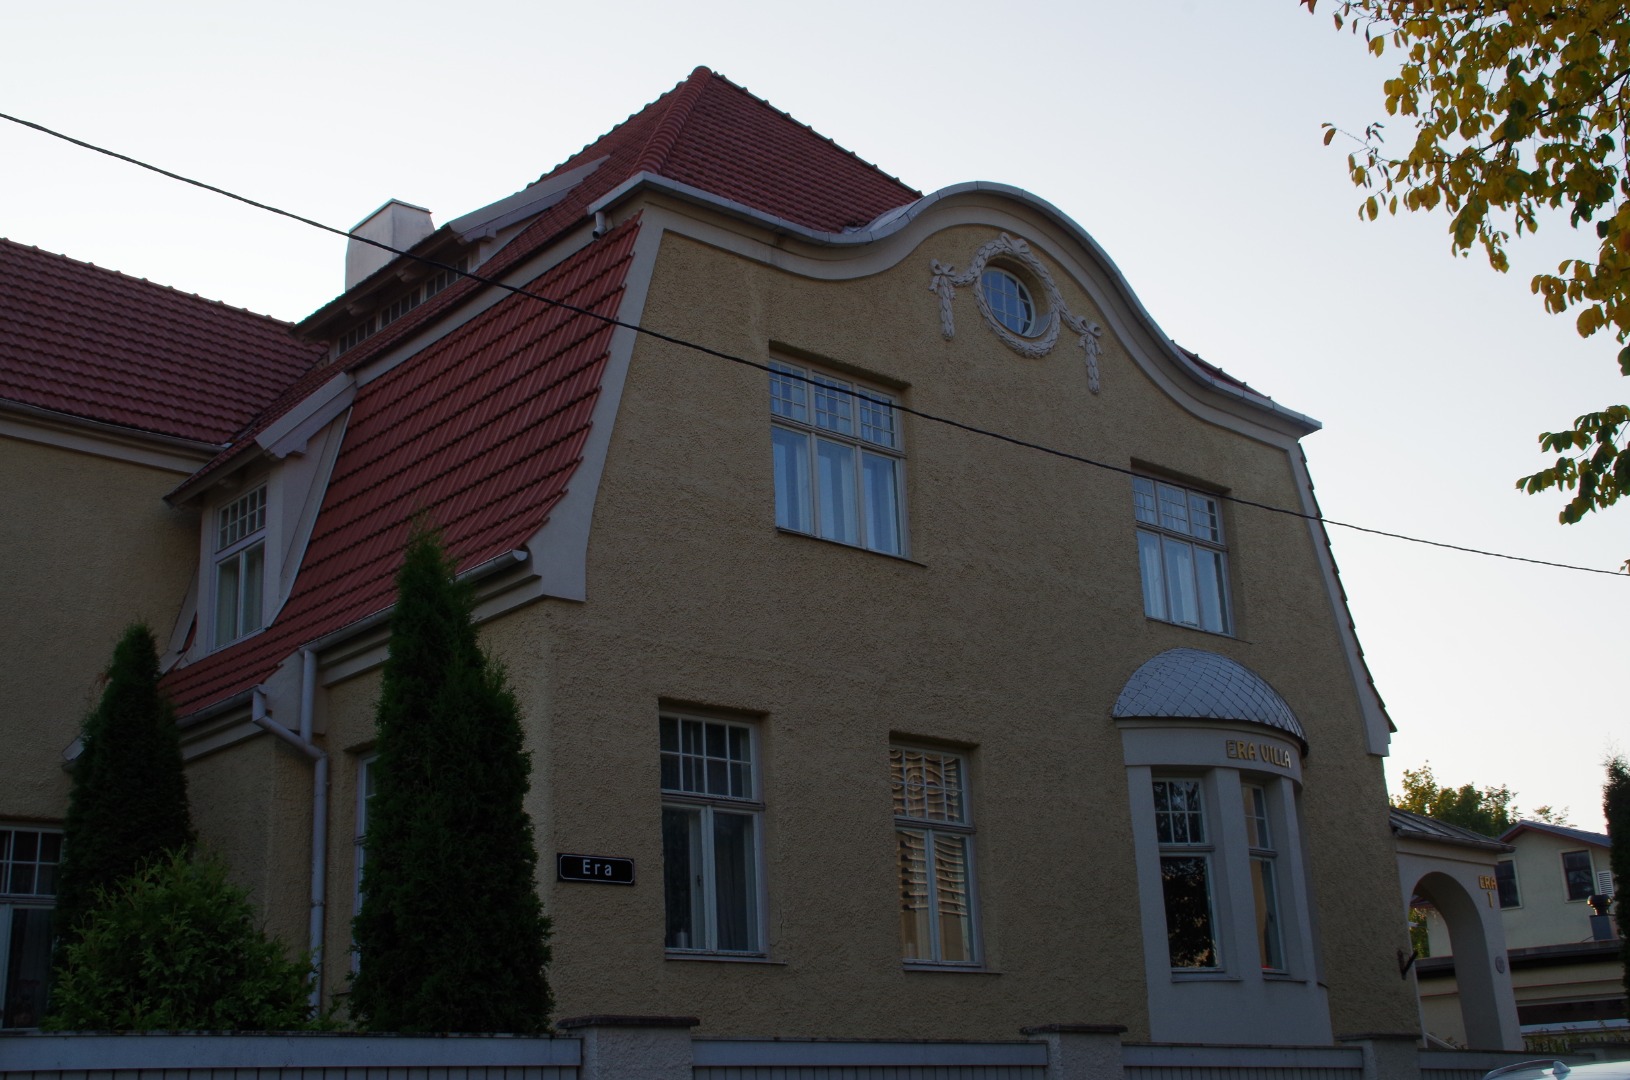 Private house in Tartu Era 1. Architect Viktor Kessler rephoto